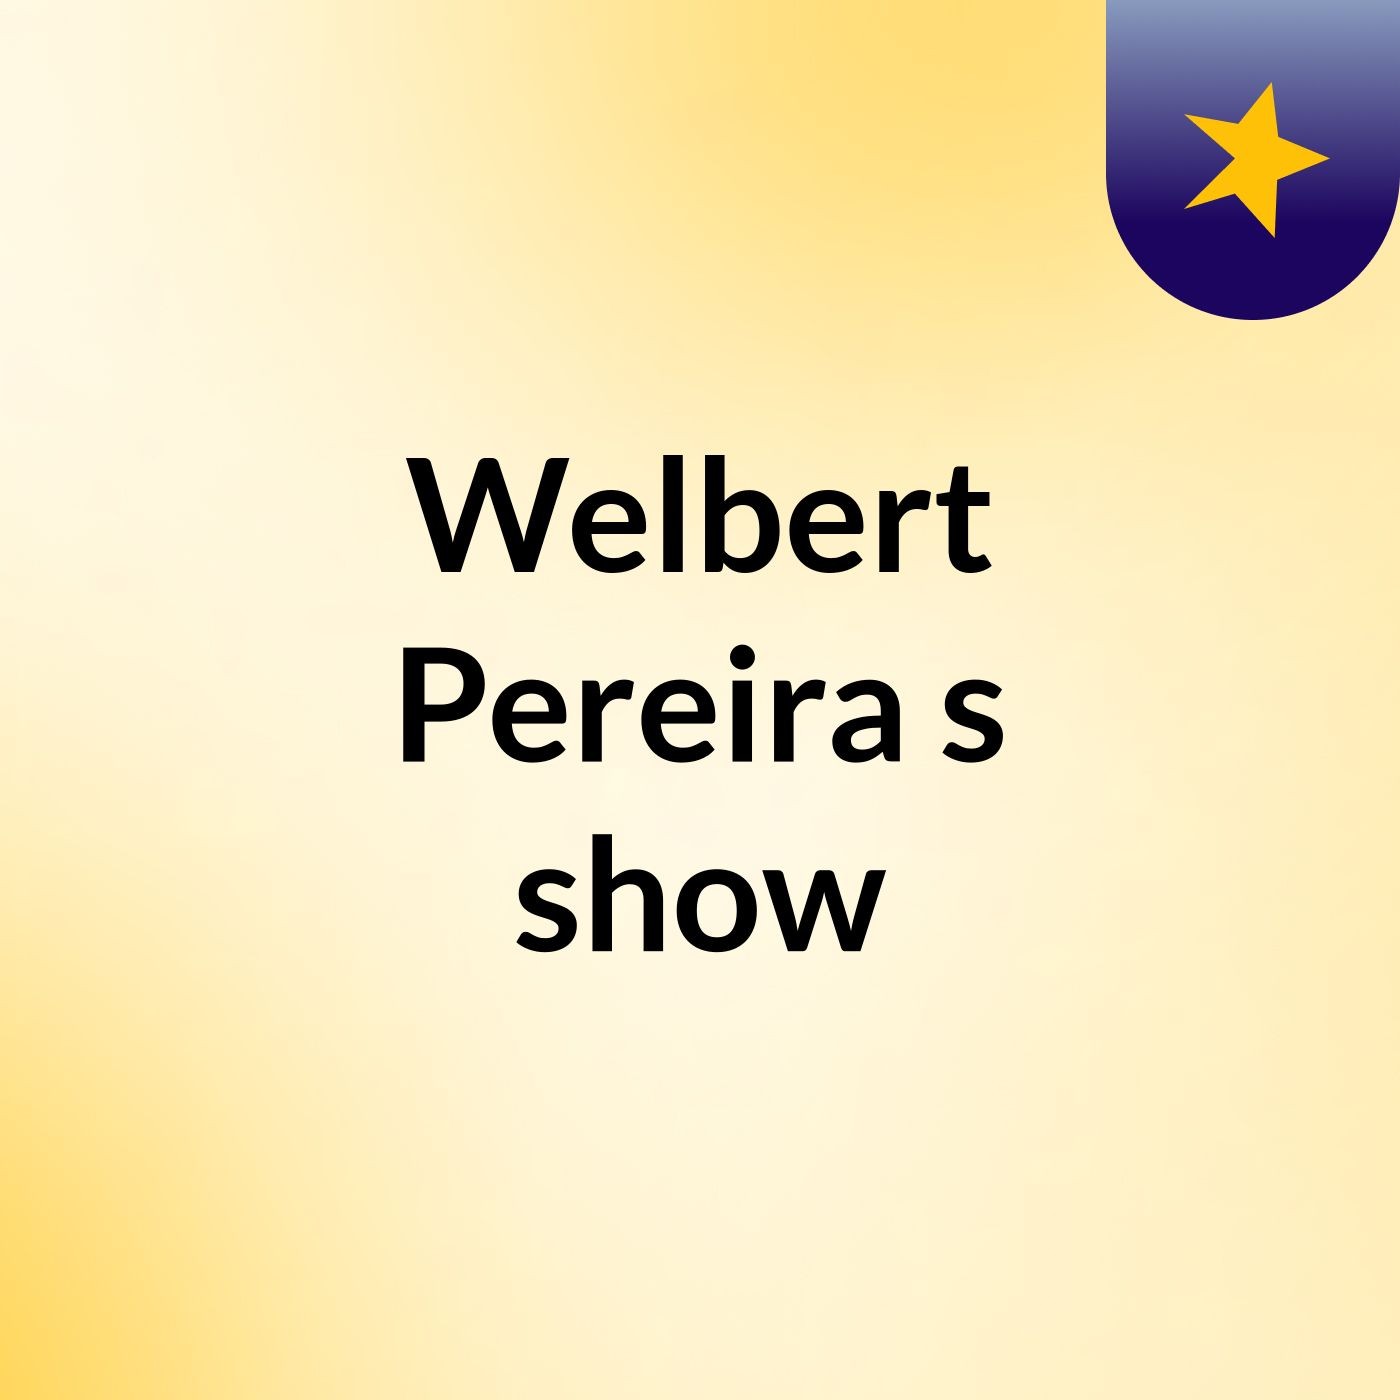 Welbert Pereira's show